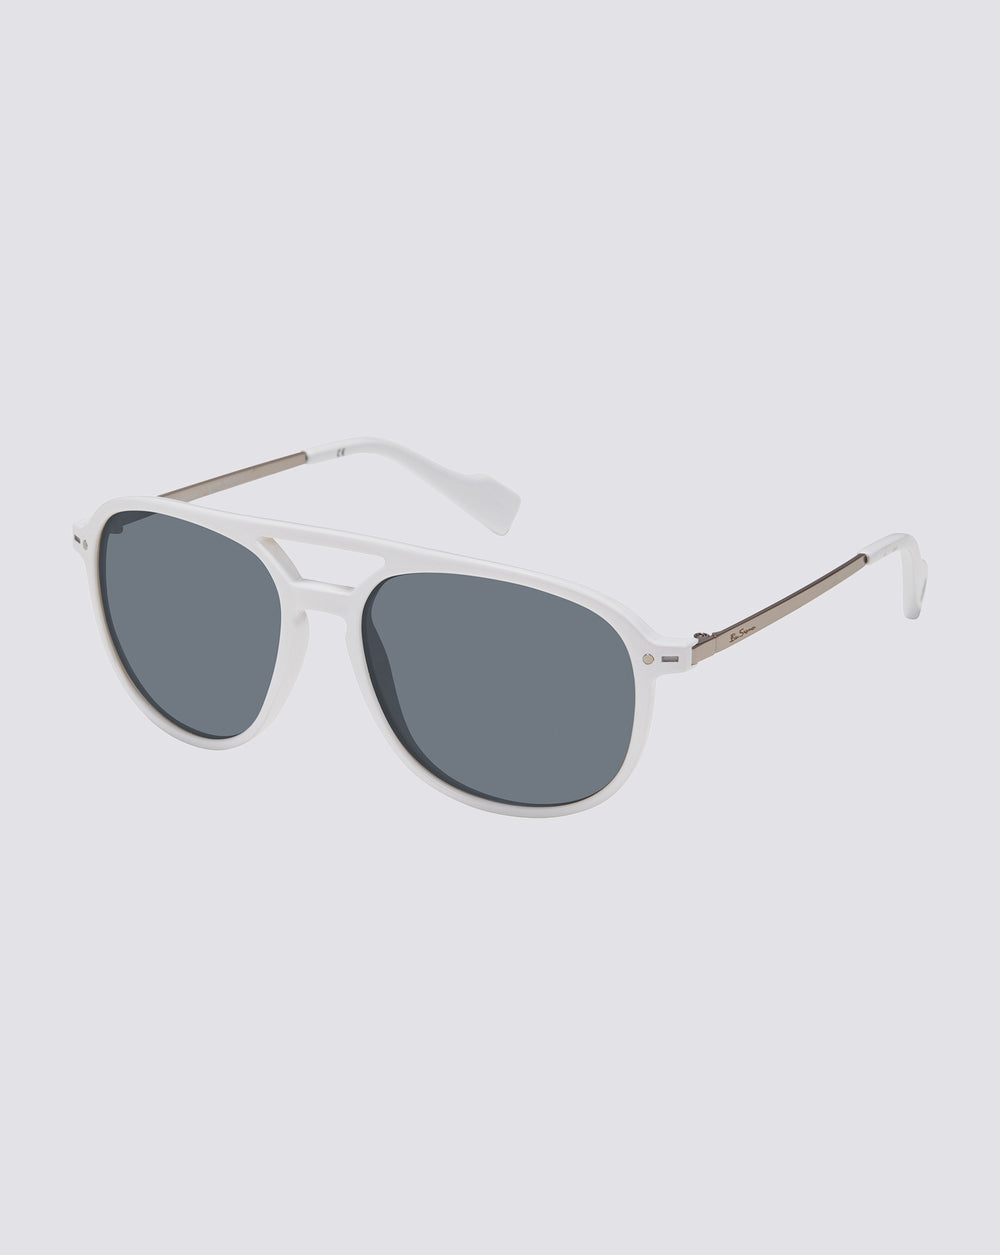 Reggie Polarized Eco-Green Sunglasses - White